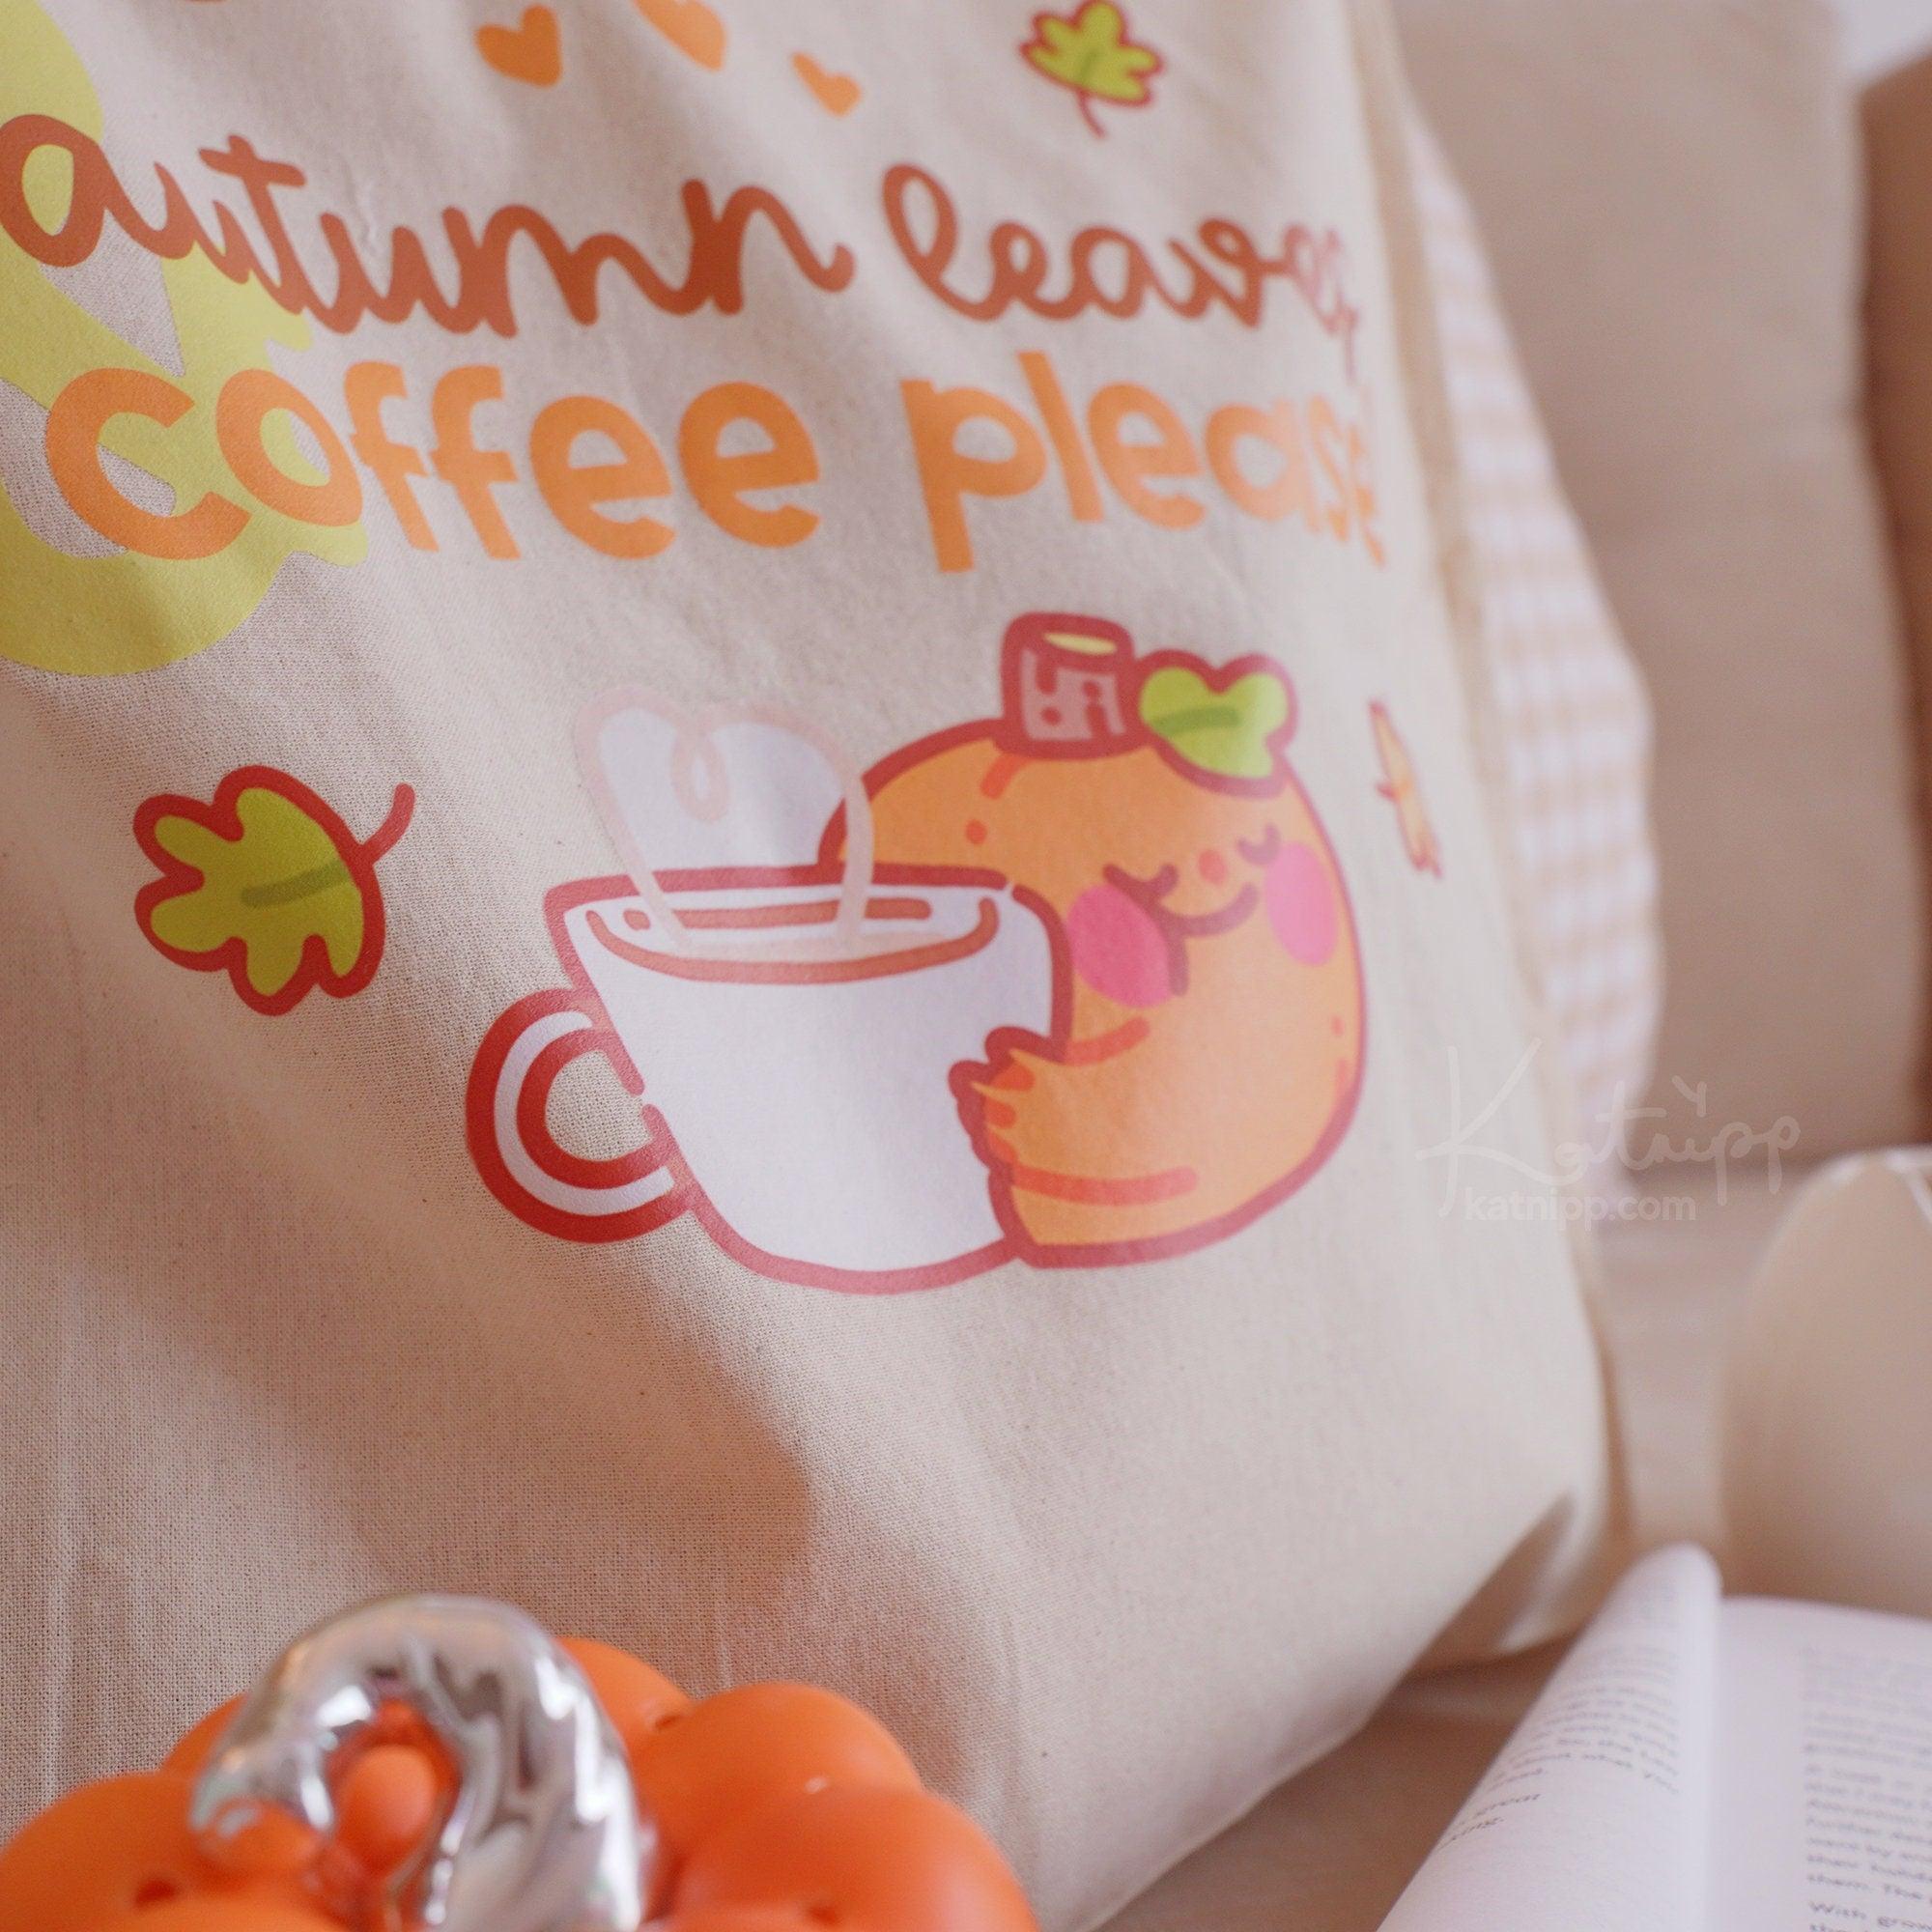 Autumn Leaves & Coffee Please! Eco-Friendly Tote Bag - Original Katnipp Design - Handprinted Cotton, secondary